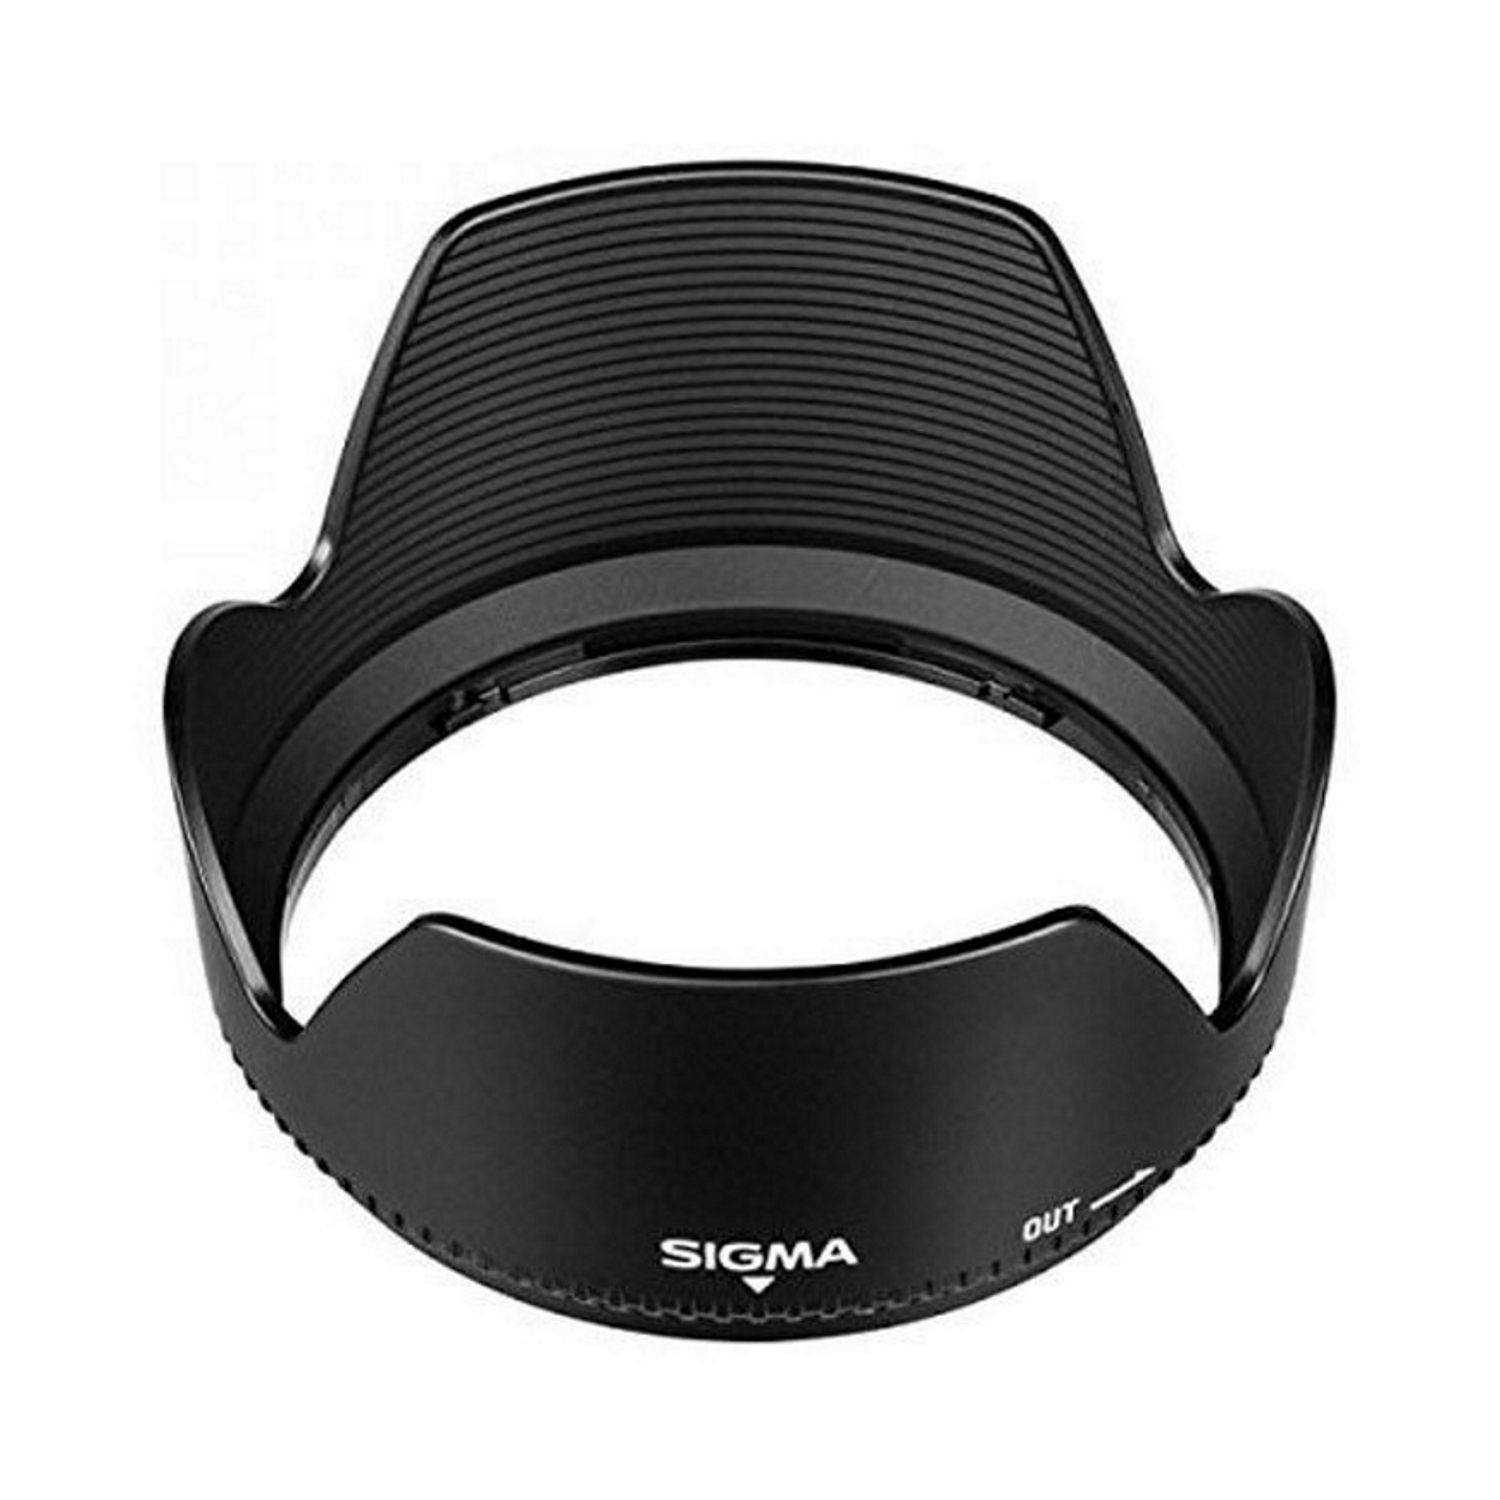 Sigma LH680-04 Lens Hood for 18-250mm f/3.5-6.3 DC MACRO OS HSM